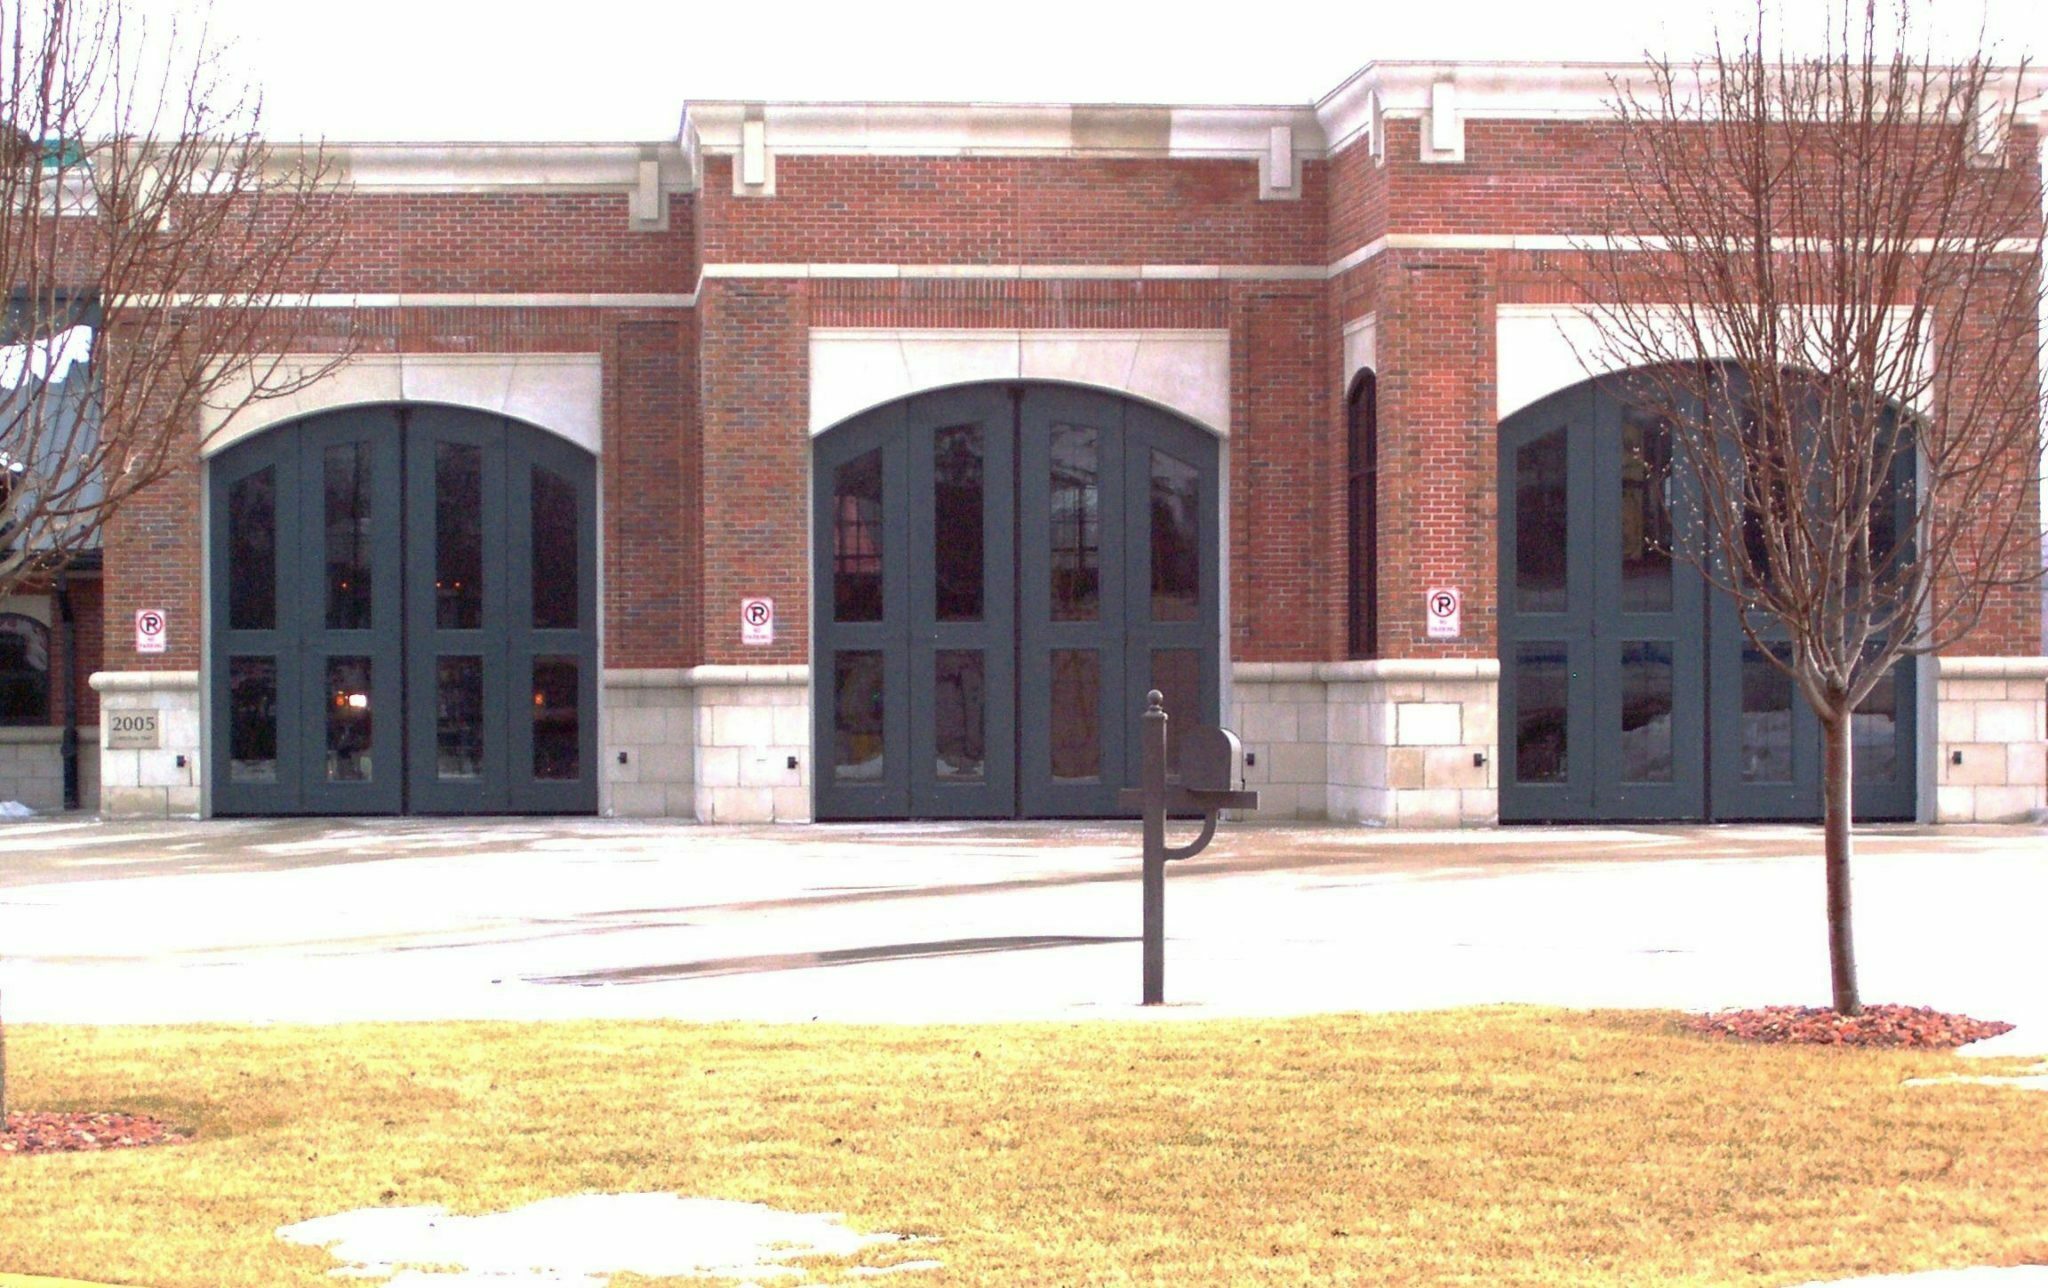 Fire Station Fold Doors